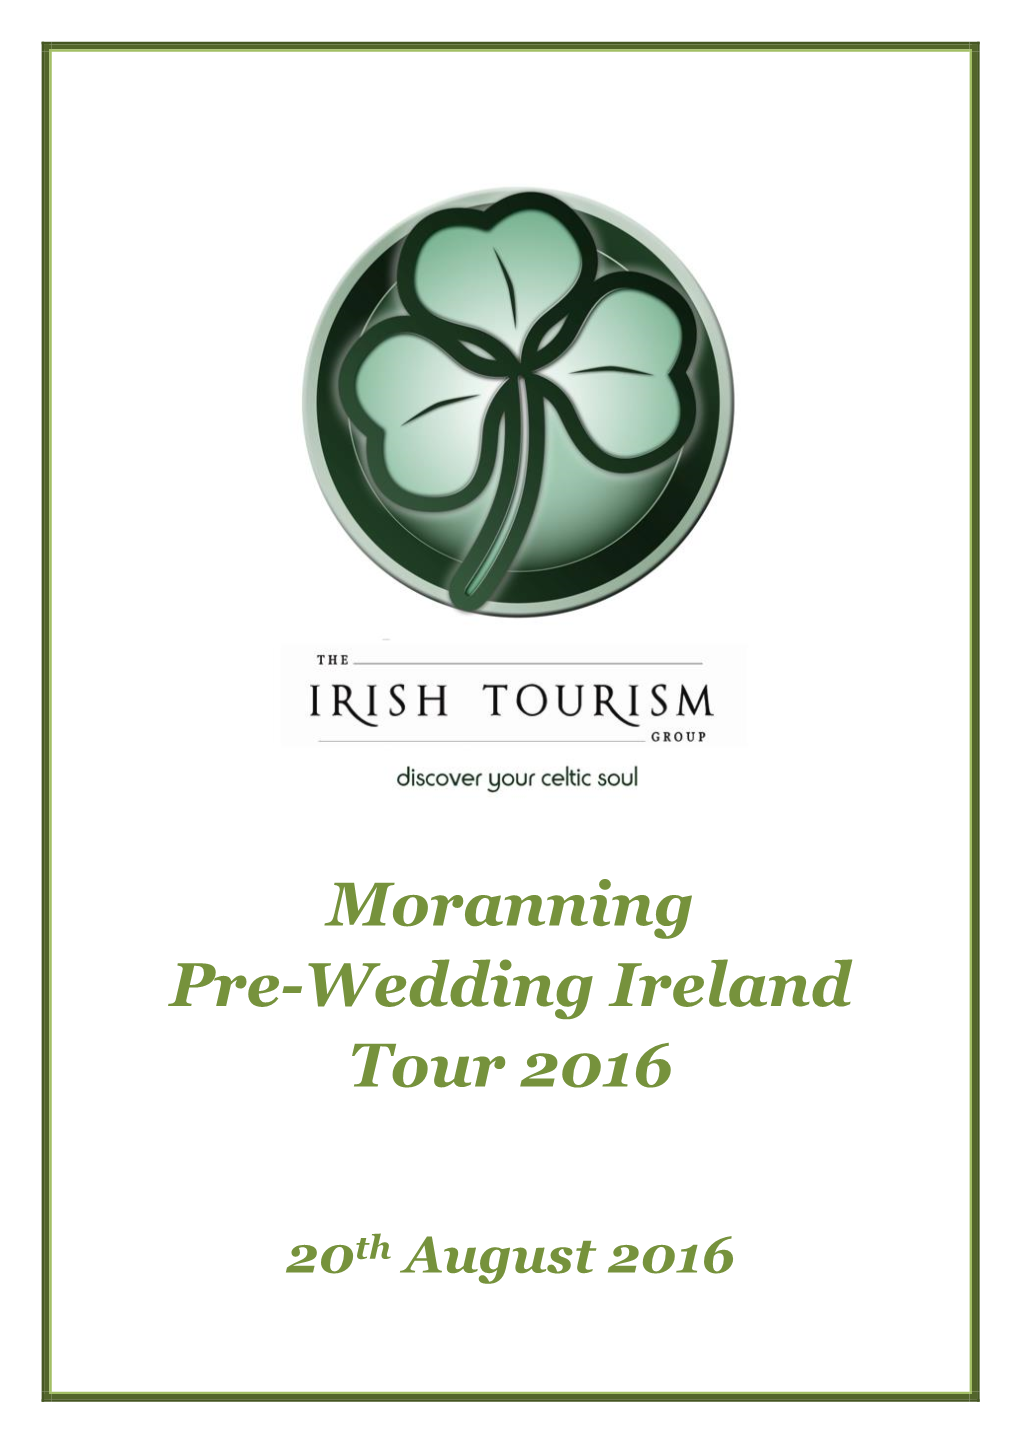 Moranning Pre-Wedding Ireland Tour 2016